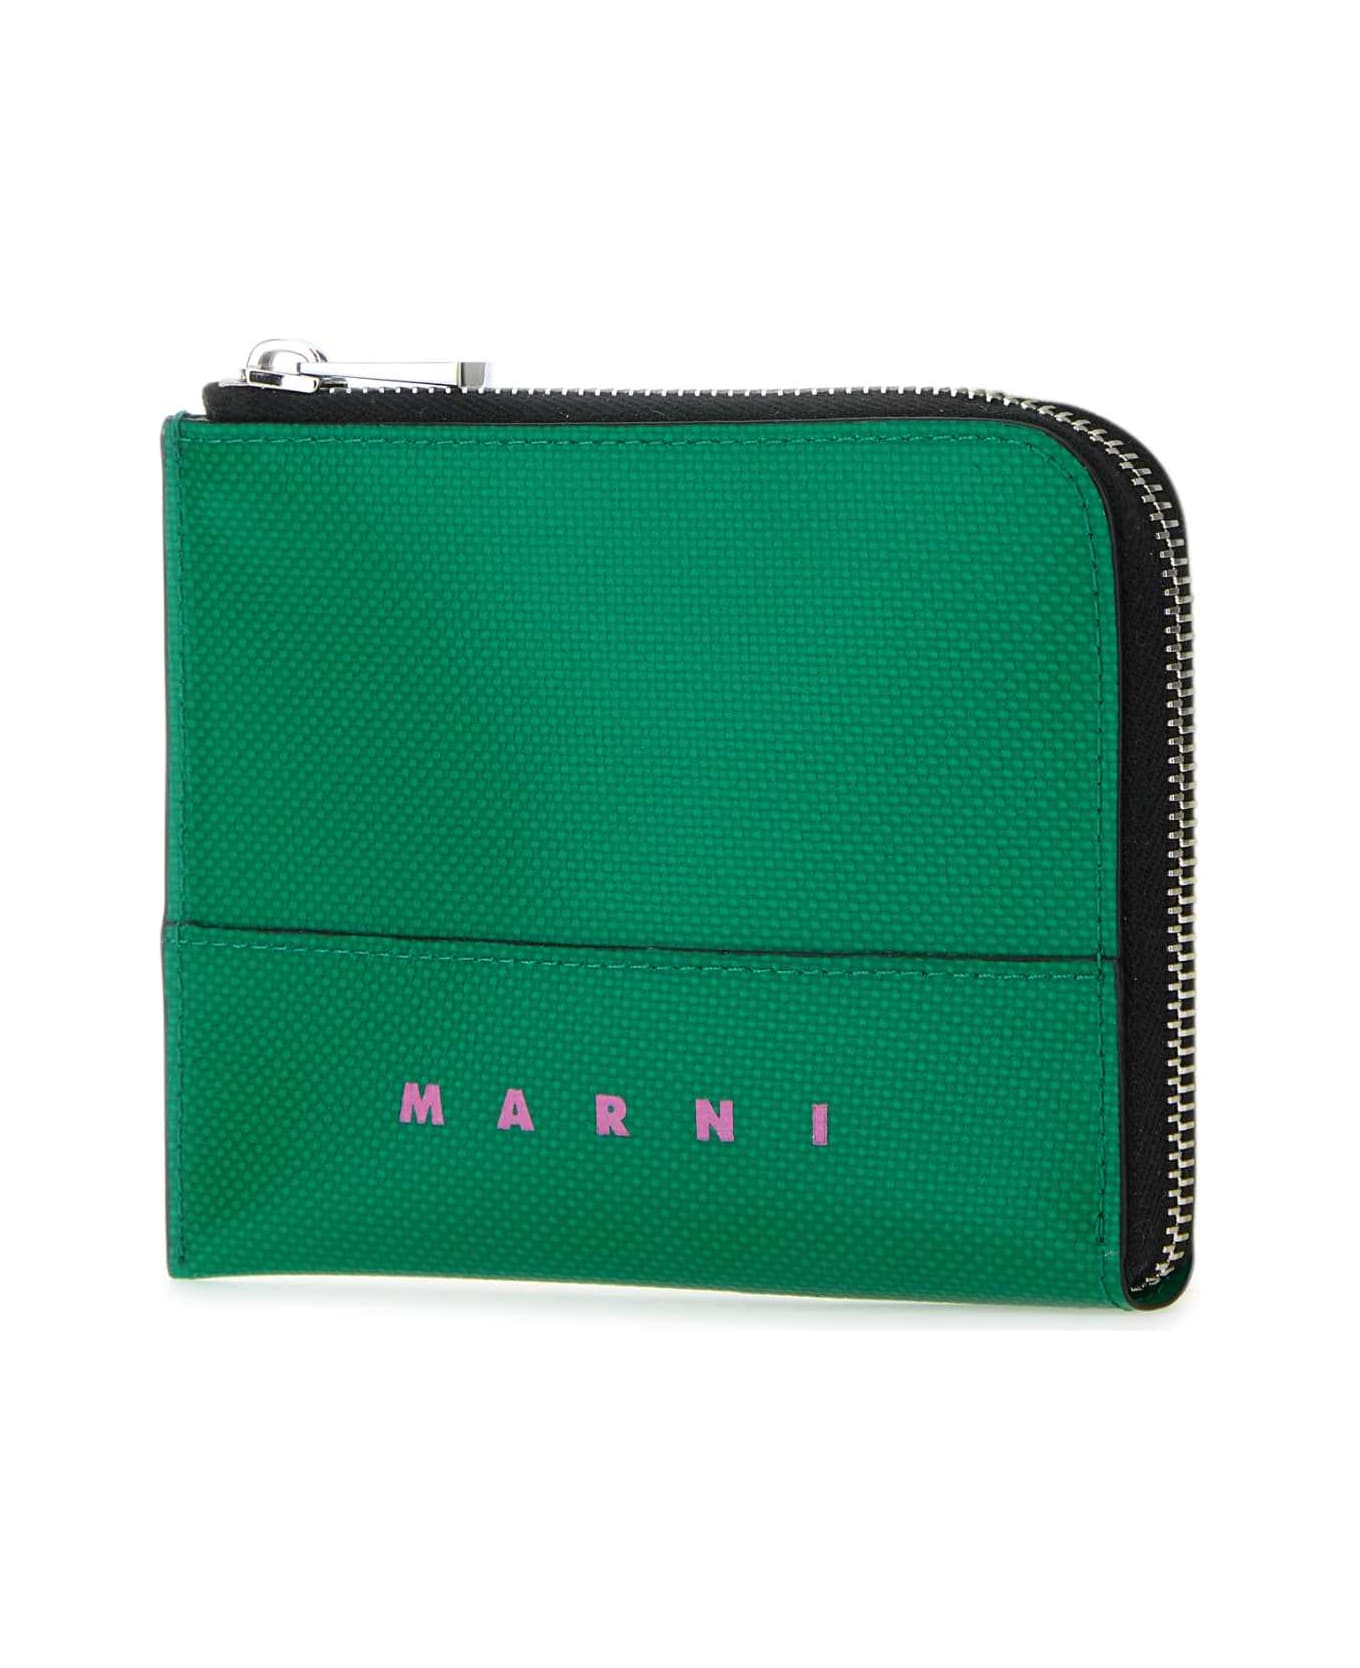 Marni Green Pvc Wallet - SEAGREEN 財布